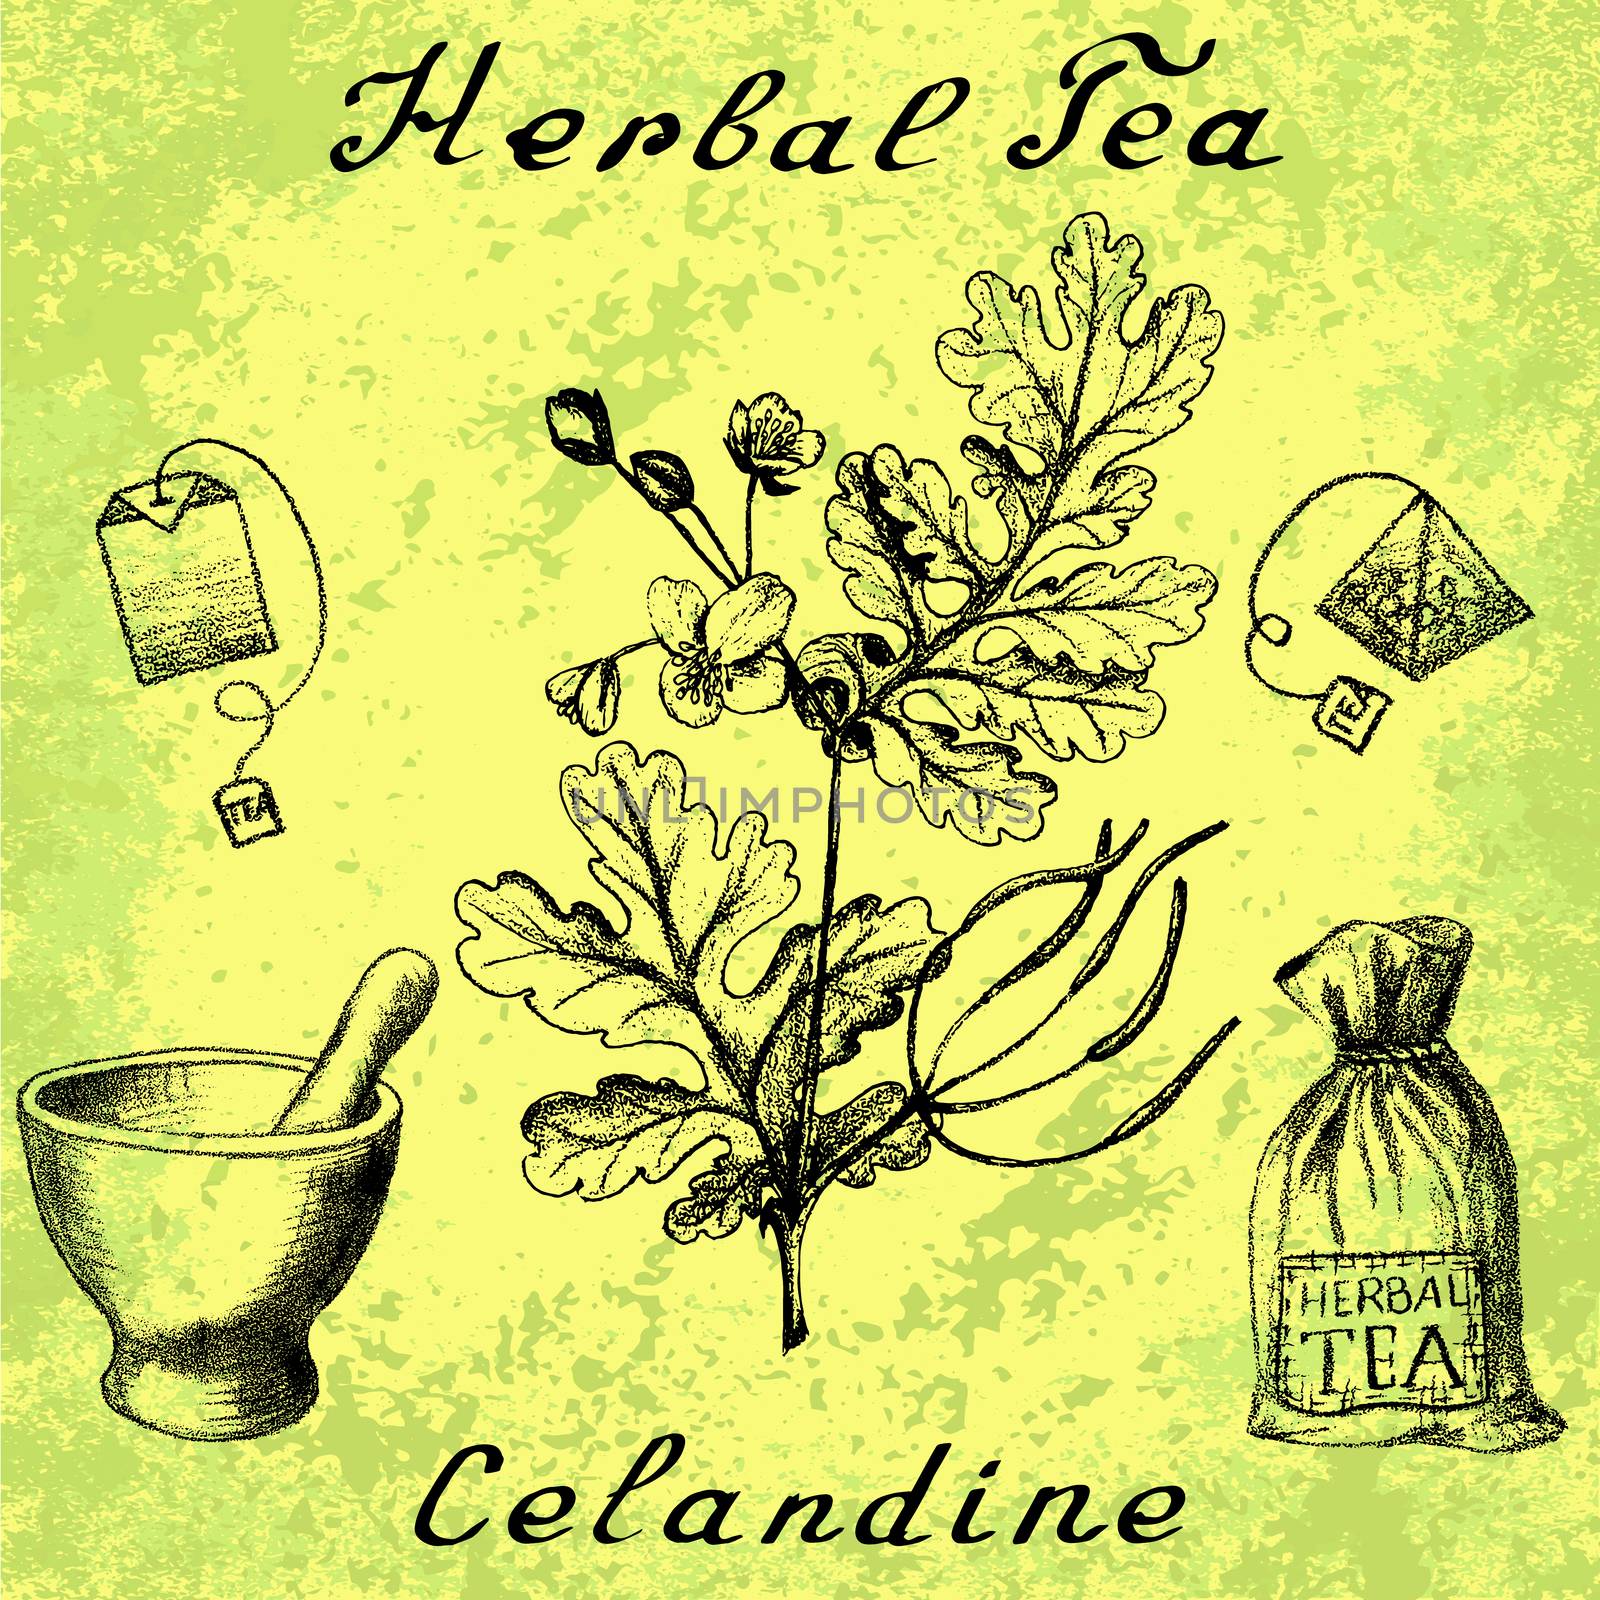 Greater celandine hand drawn botanical illustration. Vector drawing. Herbal tea elements - tea bag, bag, mortar and pestle. Medical herbs. Lettering in English languages. Grunge background